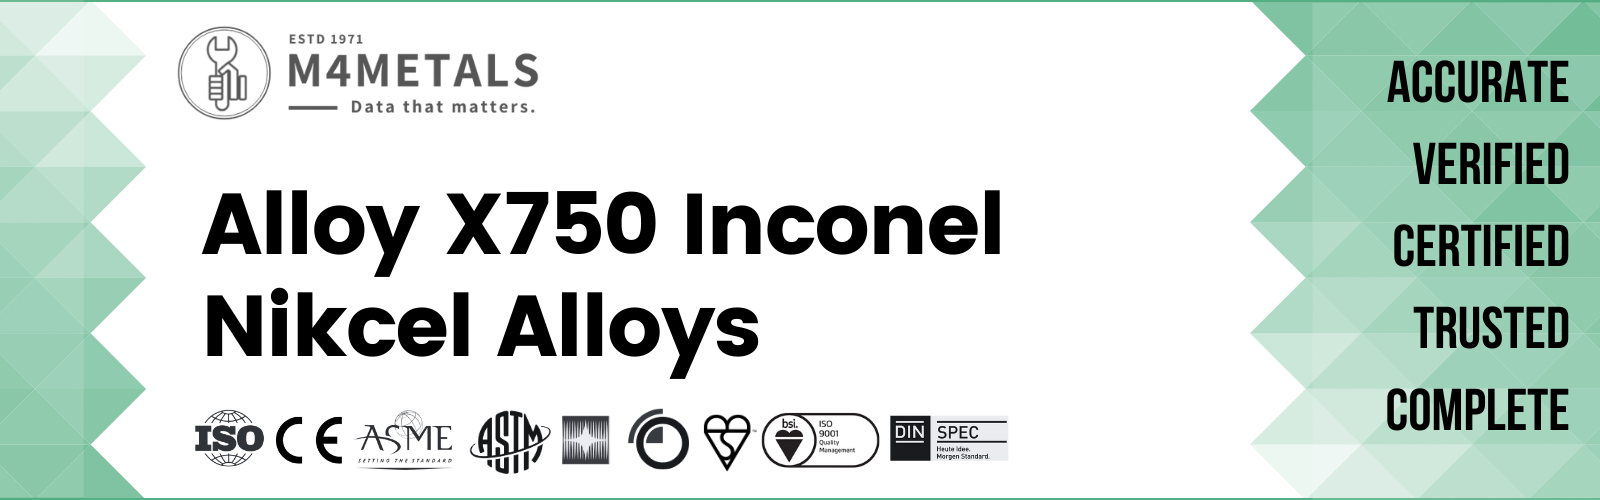 Inconel Alloy X750